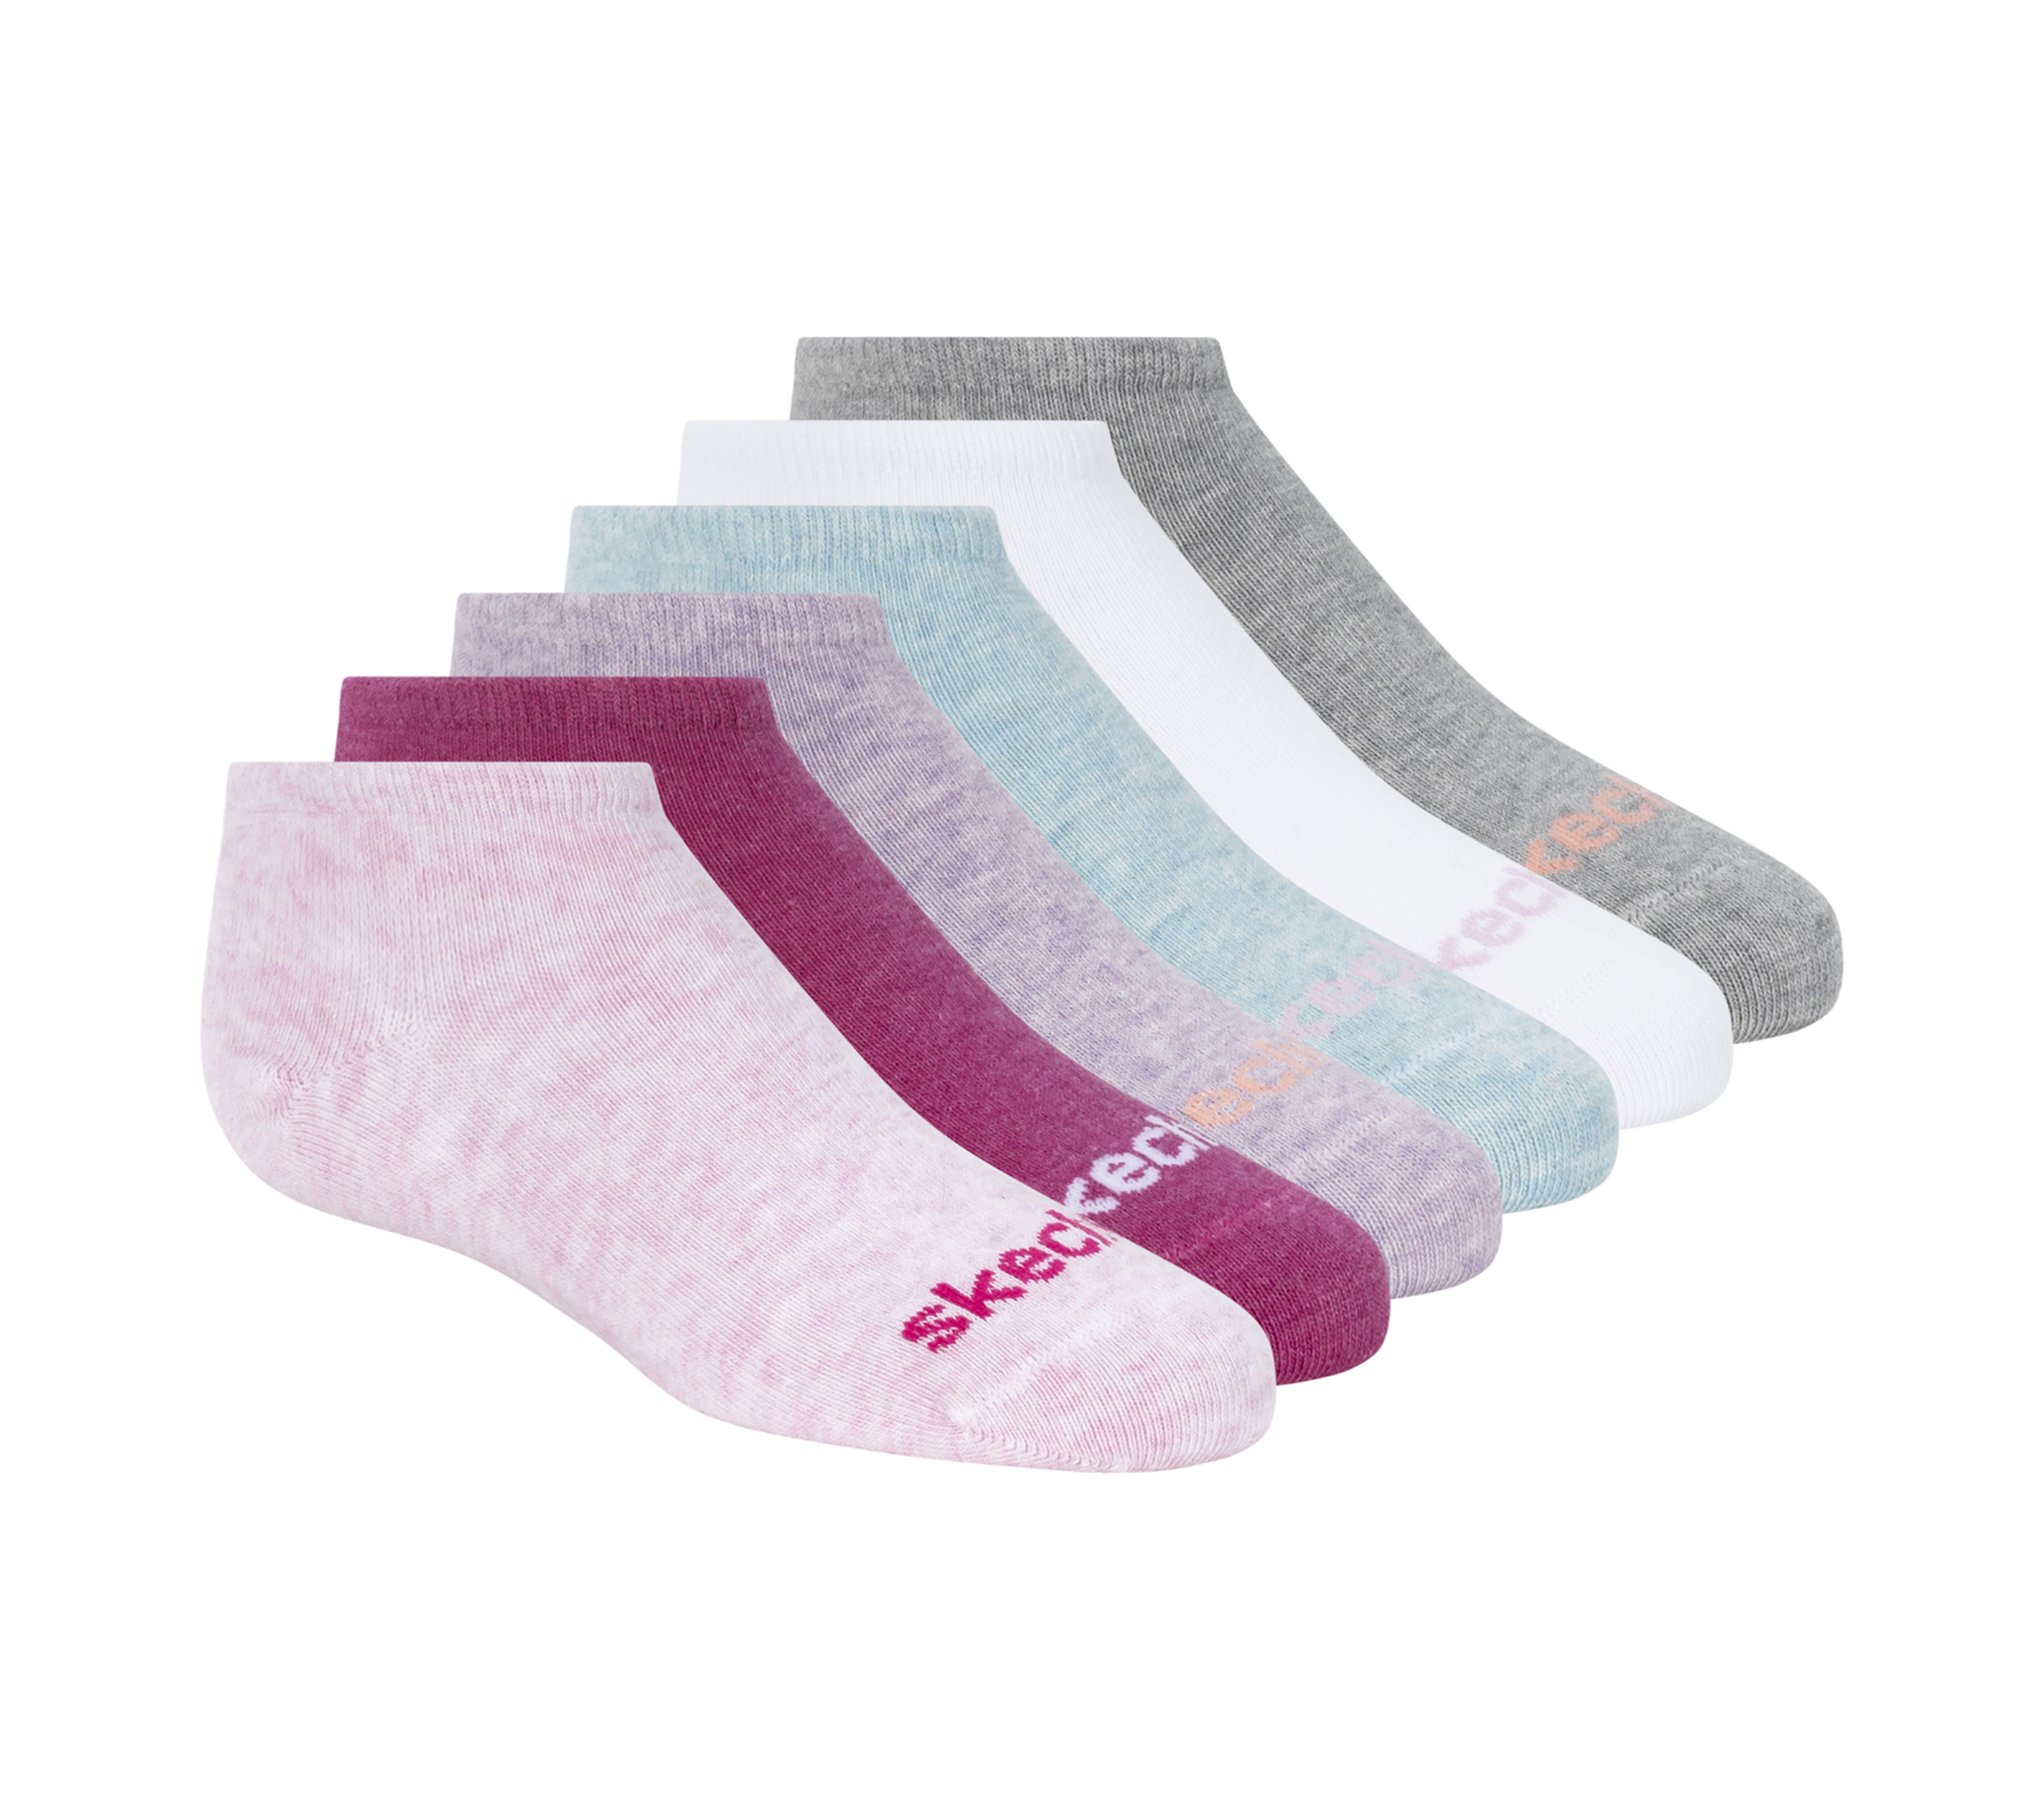 Show No 6 Pack Cotton Socks | SKECHERS